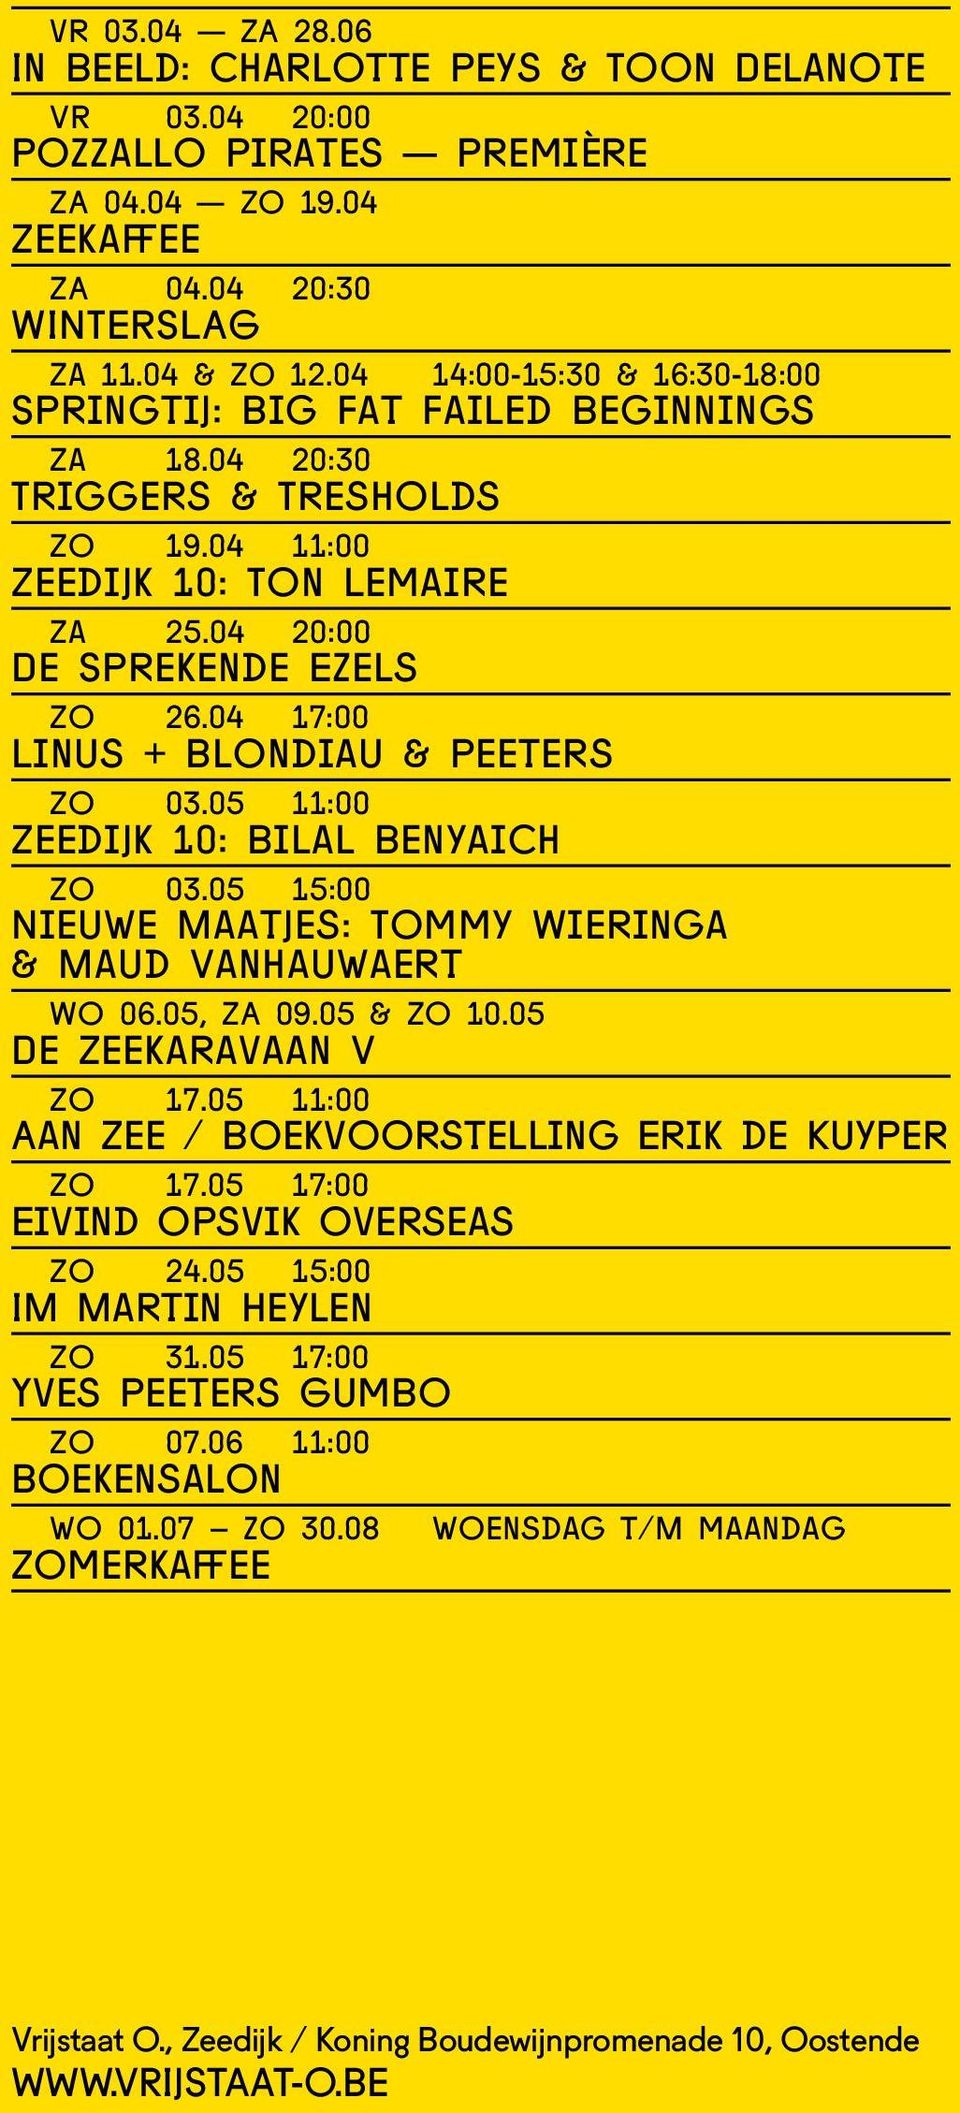 04 17:00 Linus + Blondiau & Peeters Zo 03.05 11:00 Zeedijk 10: Bilal Benyaich Zo 03.05 15:00 Nieuwe Maatjes: Tommy Wieringa & Maud Vanhauwaert WO 06.05, ZA 09.05 & ZO 10.05 De Zeekaravaan V Zo 17.